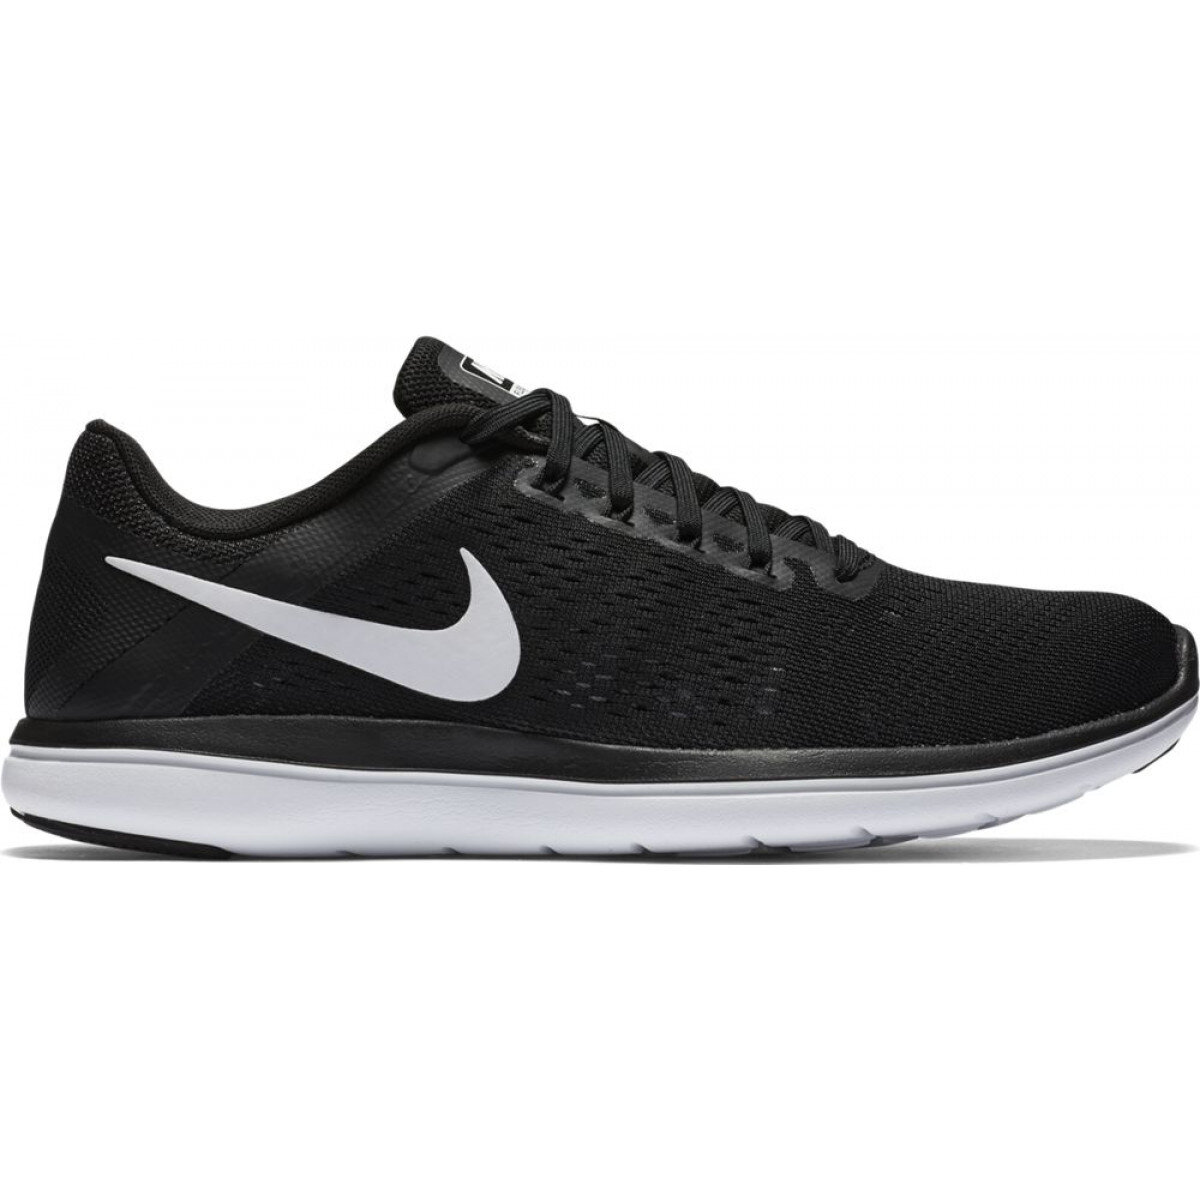 Nike Flex 2016 RN Women's Running Shoes in Black.jpg